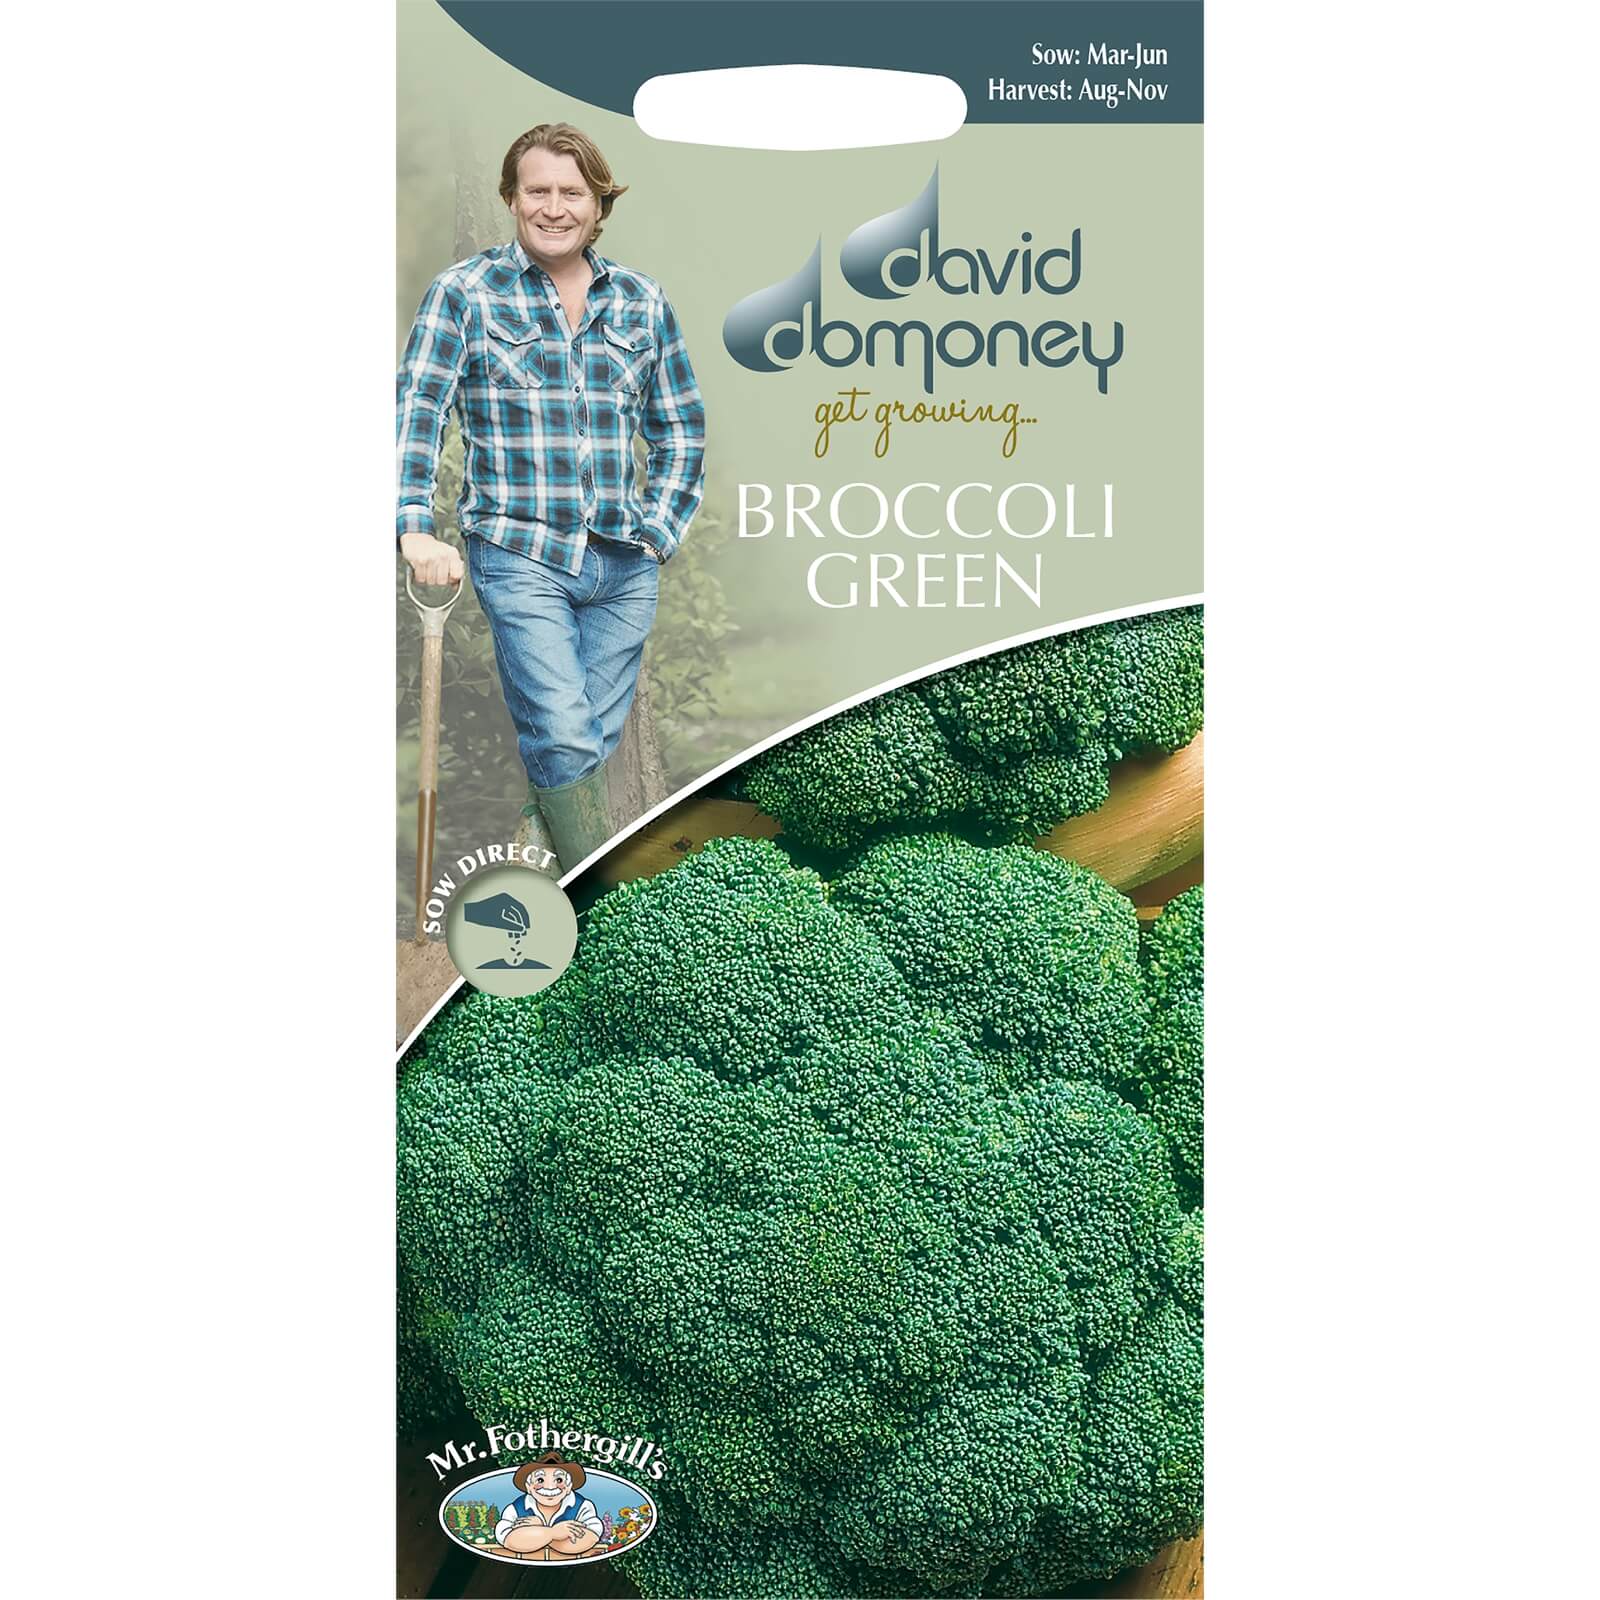 David Domoney Broccoli Green Seeds